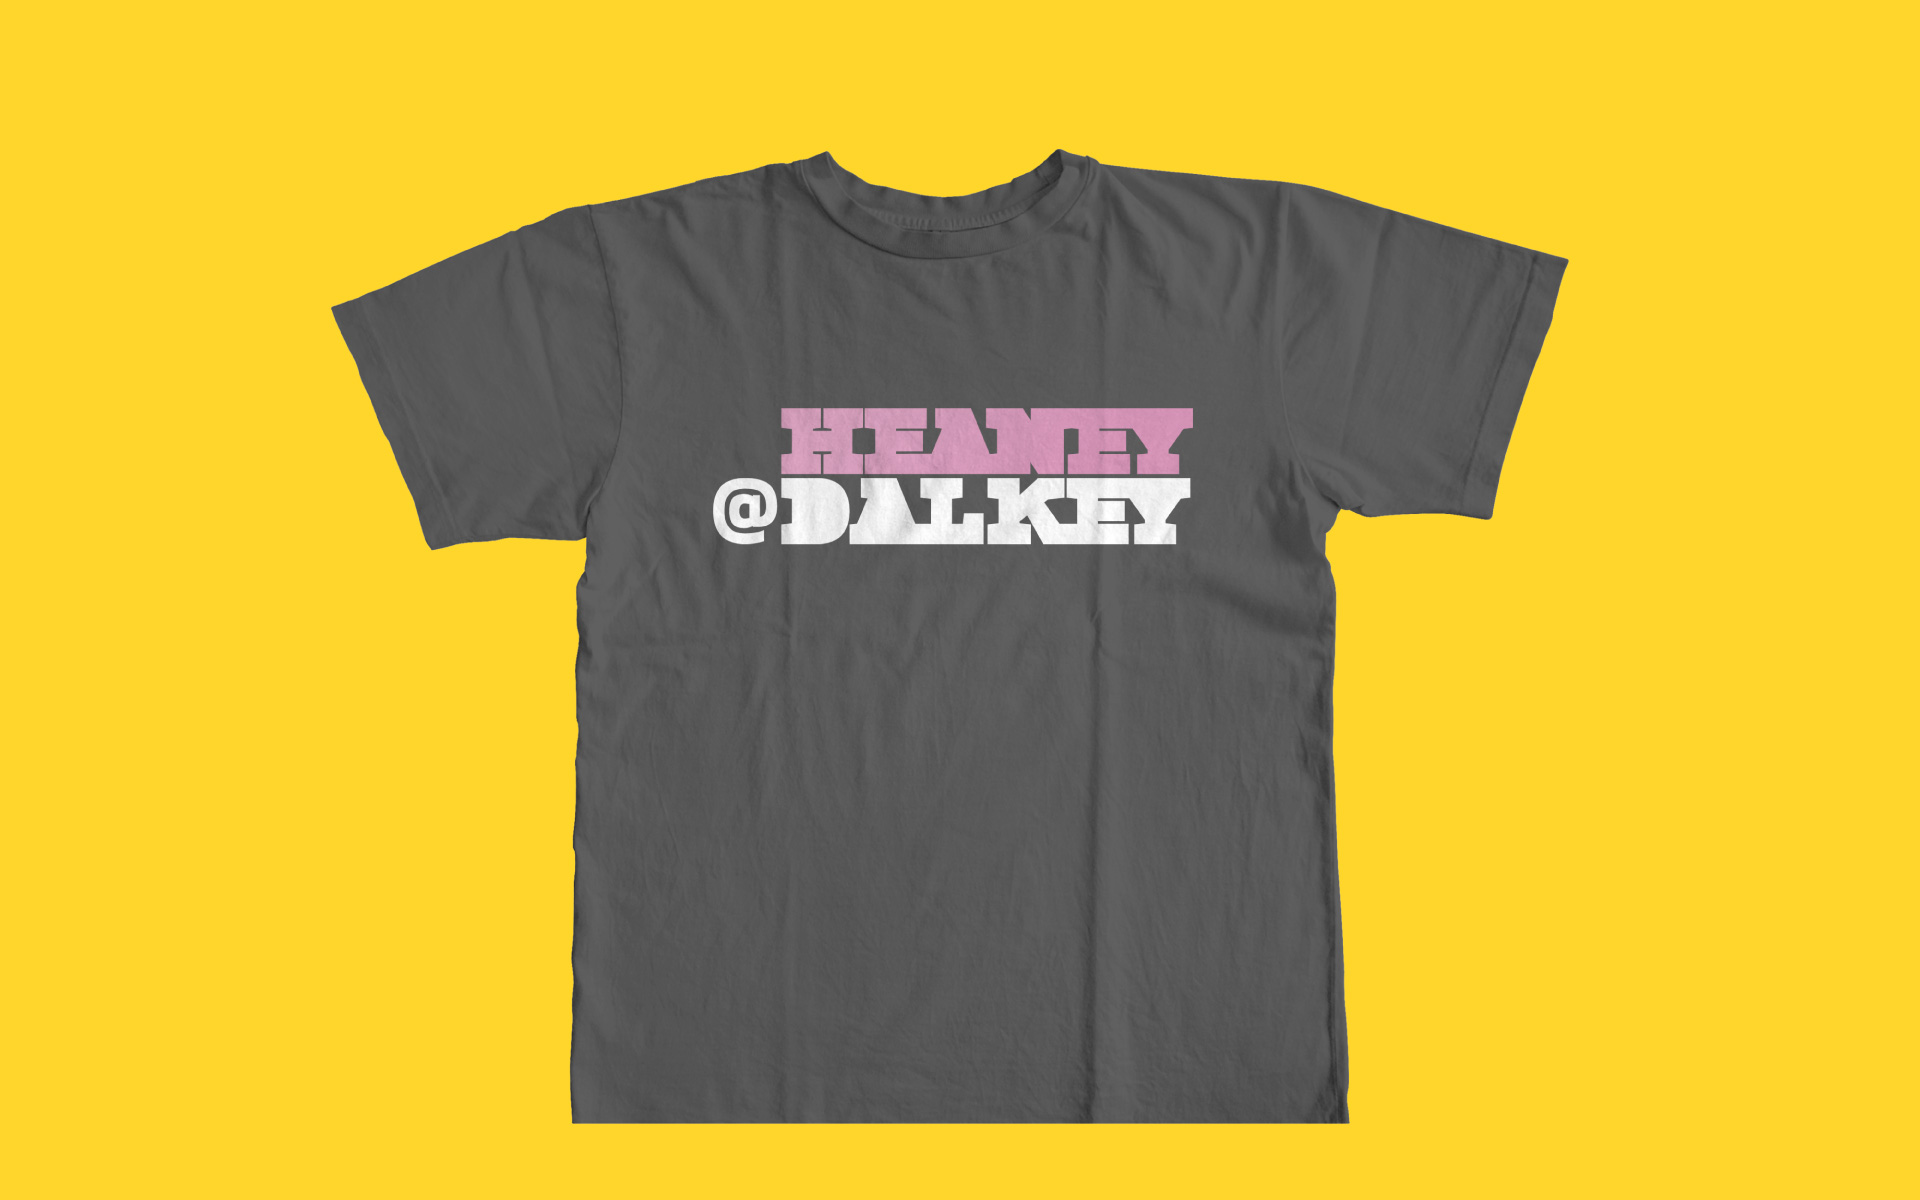 Dalkey Book Festival t-shirt